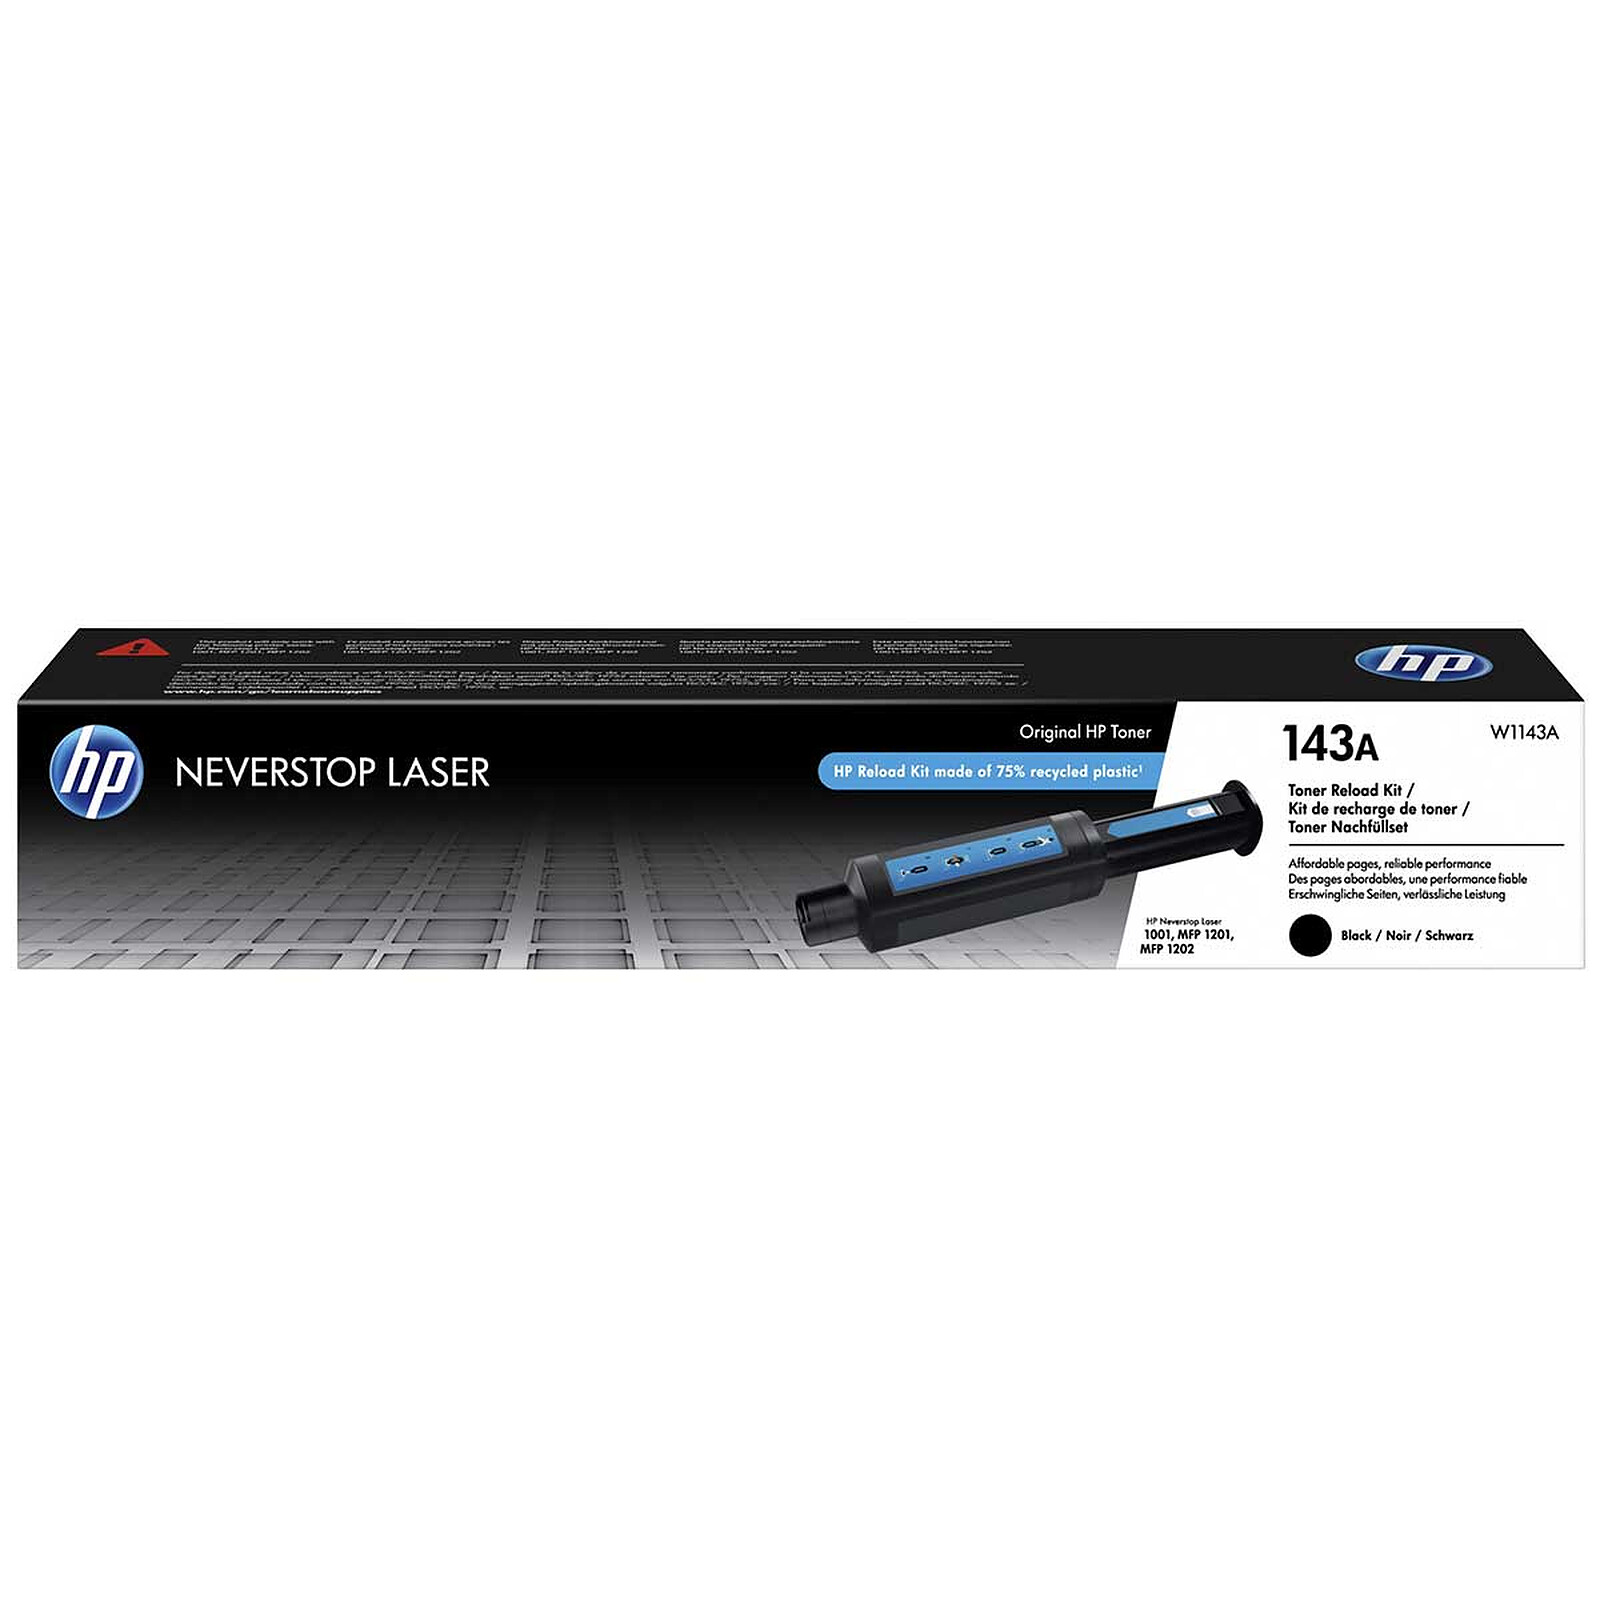 HP 143A Toner cartridge (W1143A) - LDLC - Black 